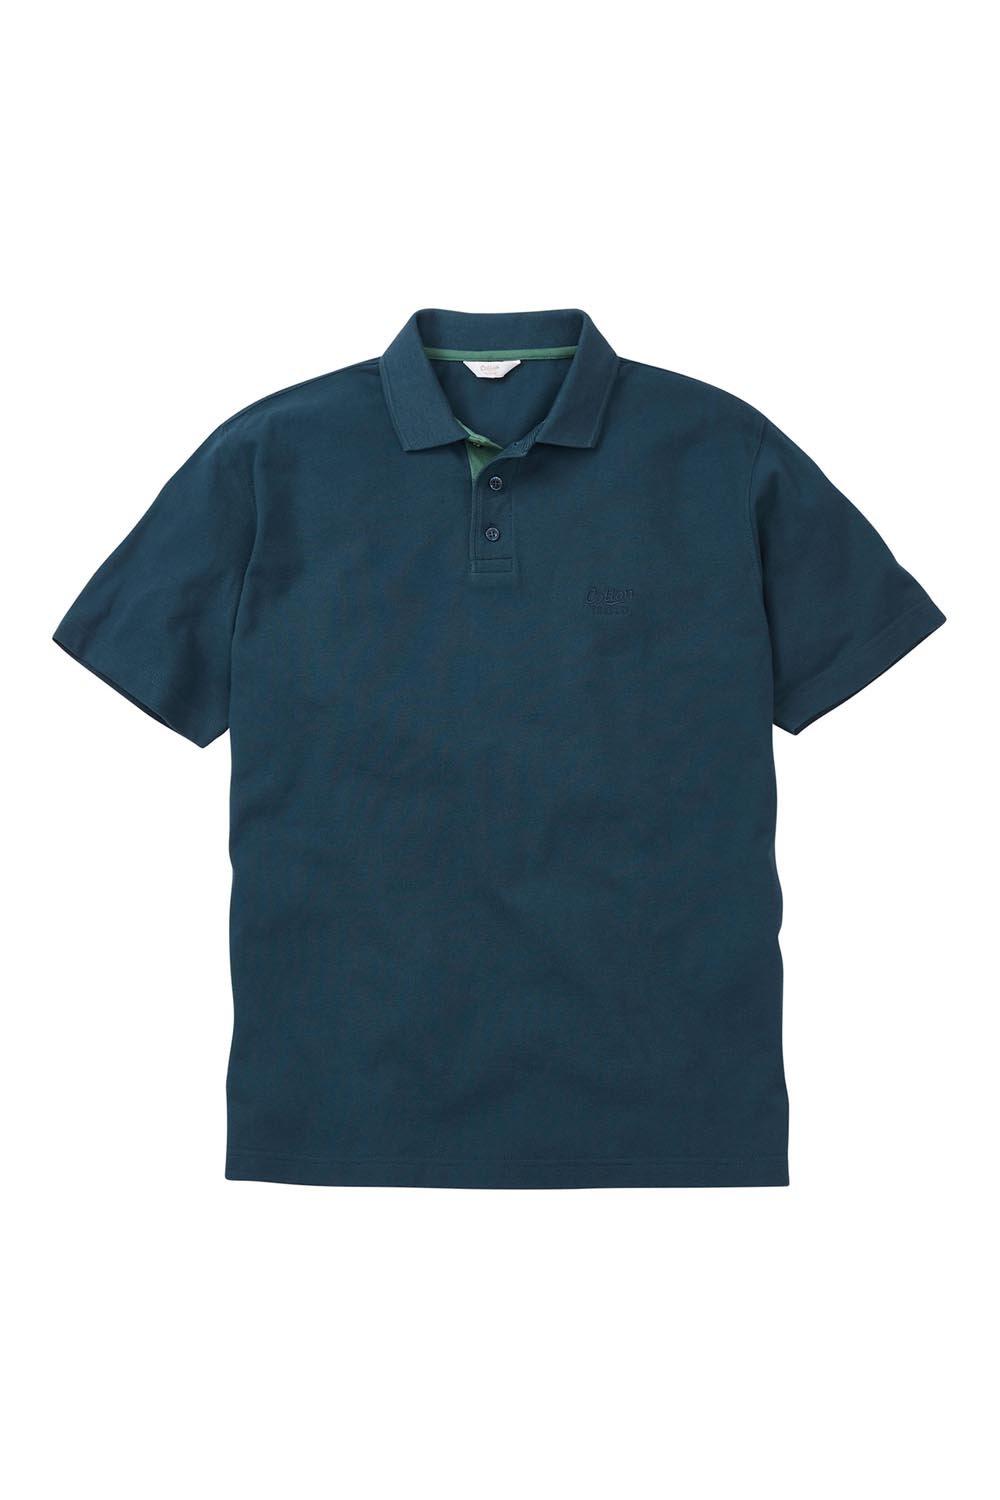 Рубашка поло с коротким рукавом Cotton Traders, зеленый цена и фото